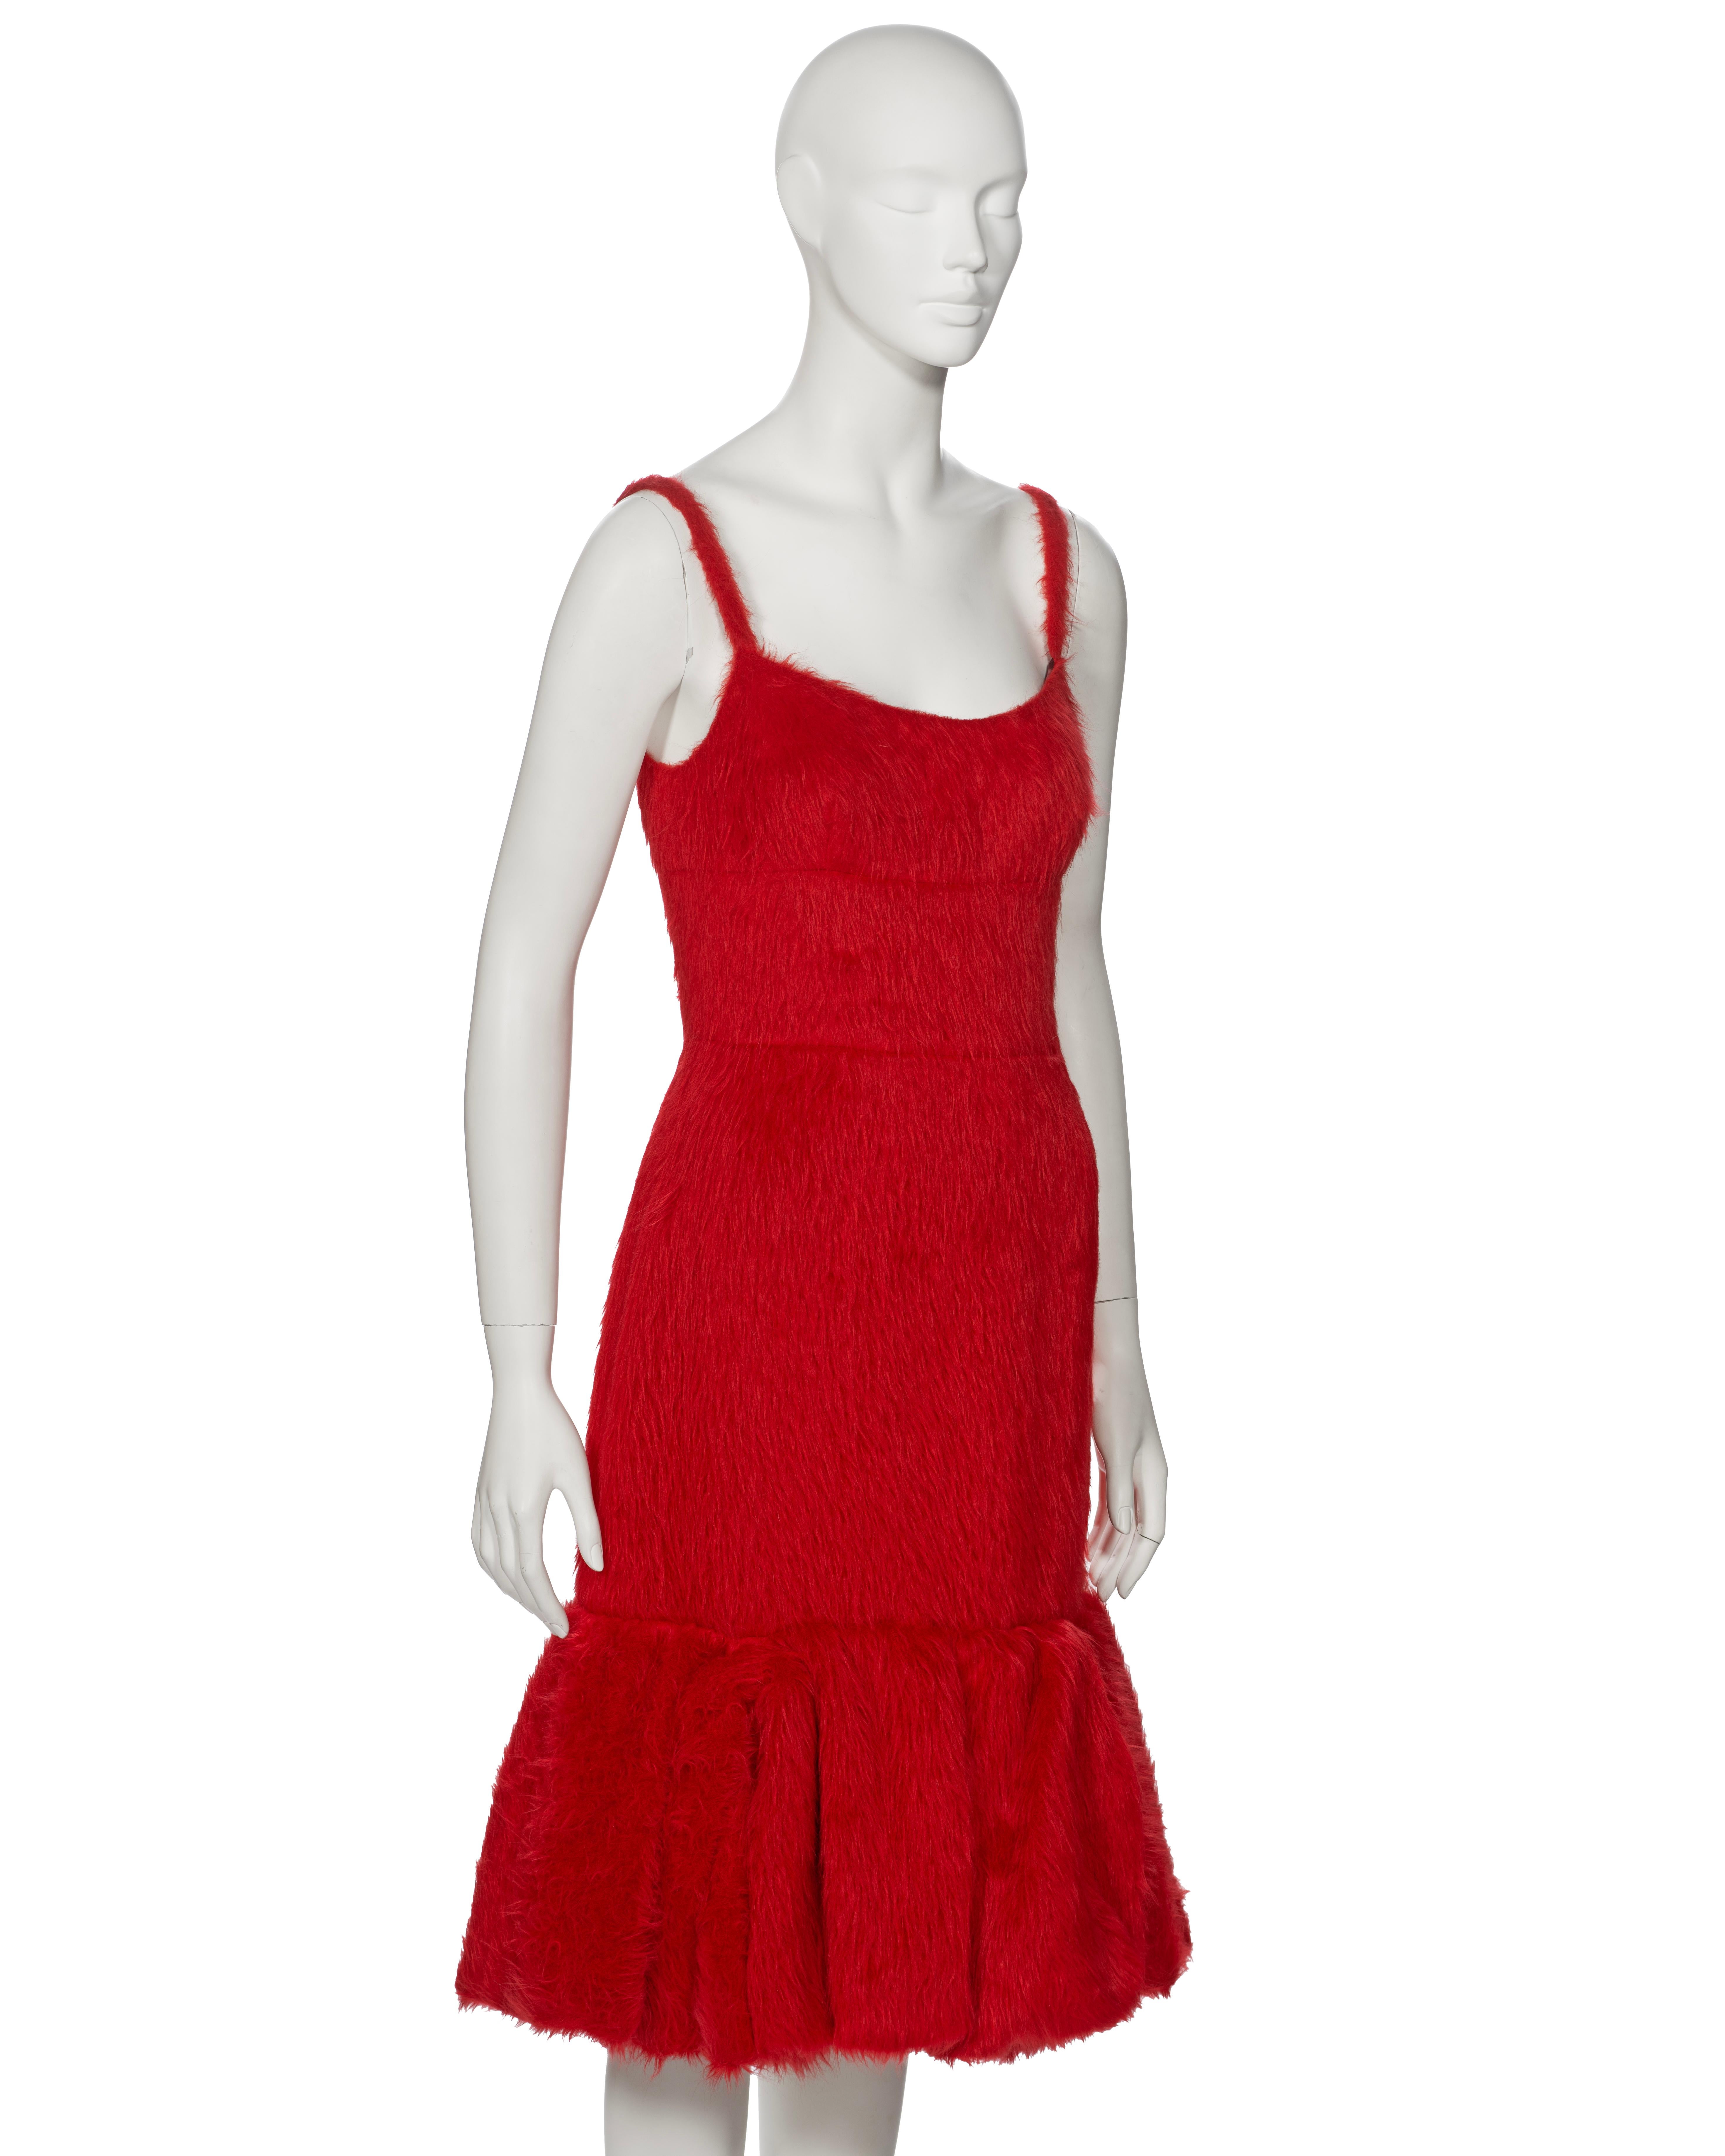 Prada by Miuccia Prada Red Brushed Alpaca Silk Cocktail Dress, fw 2017 For Sale 2